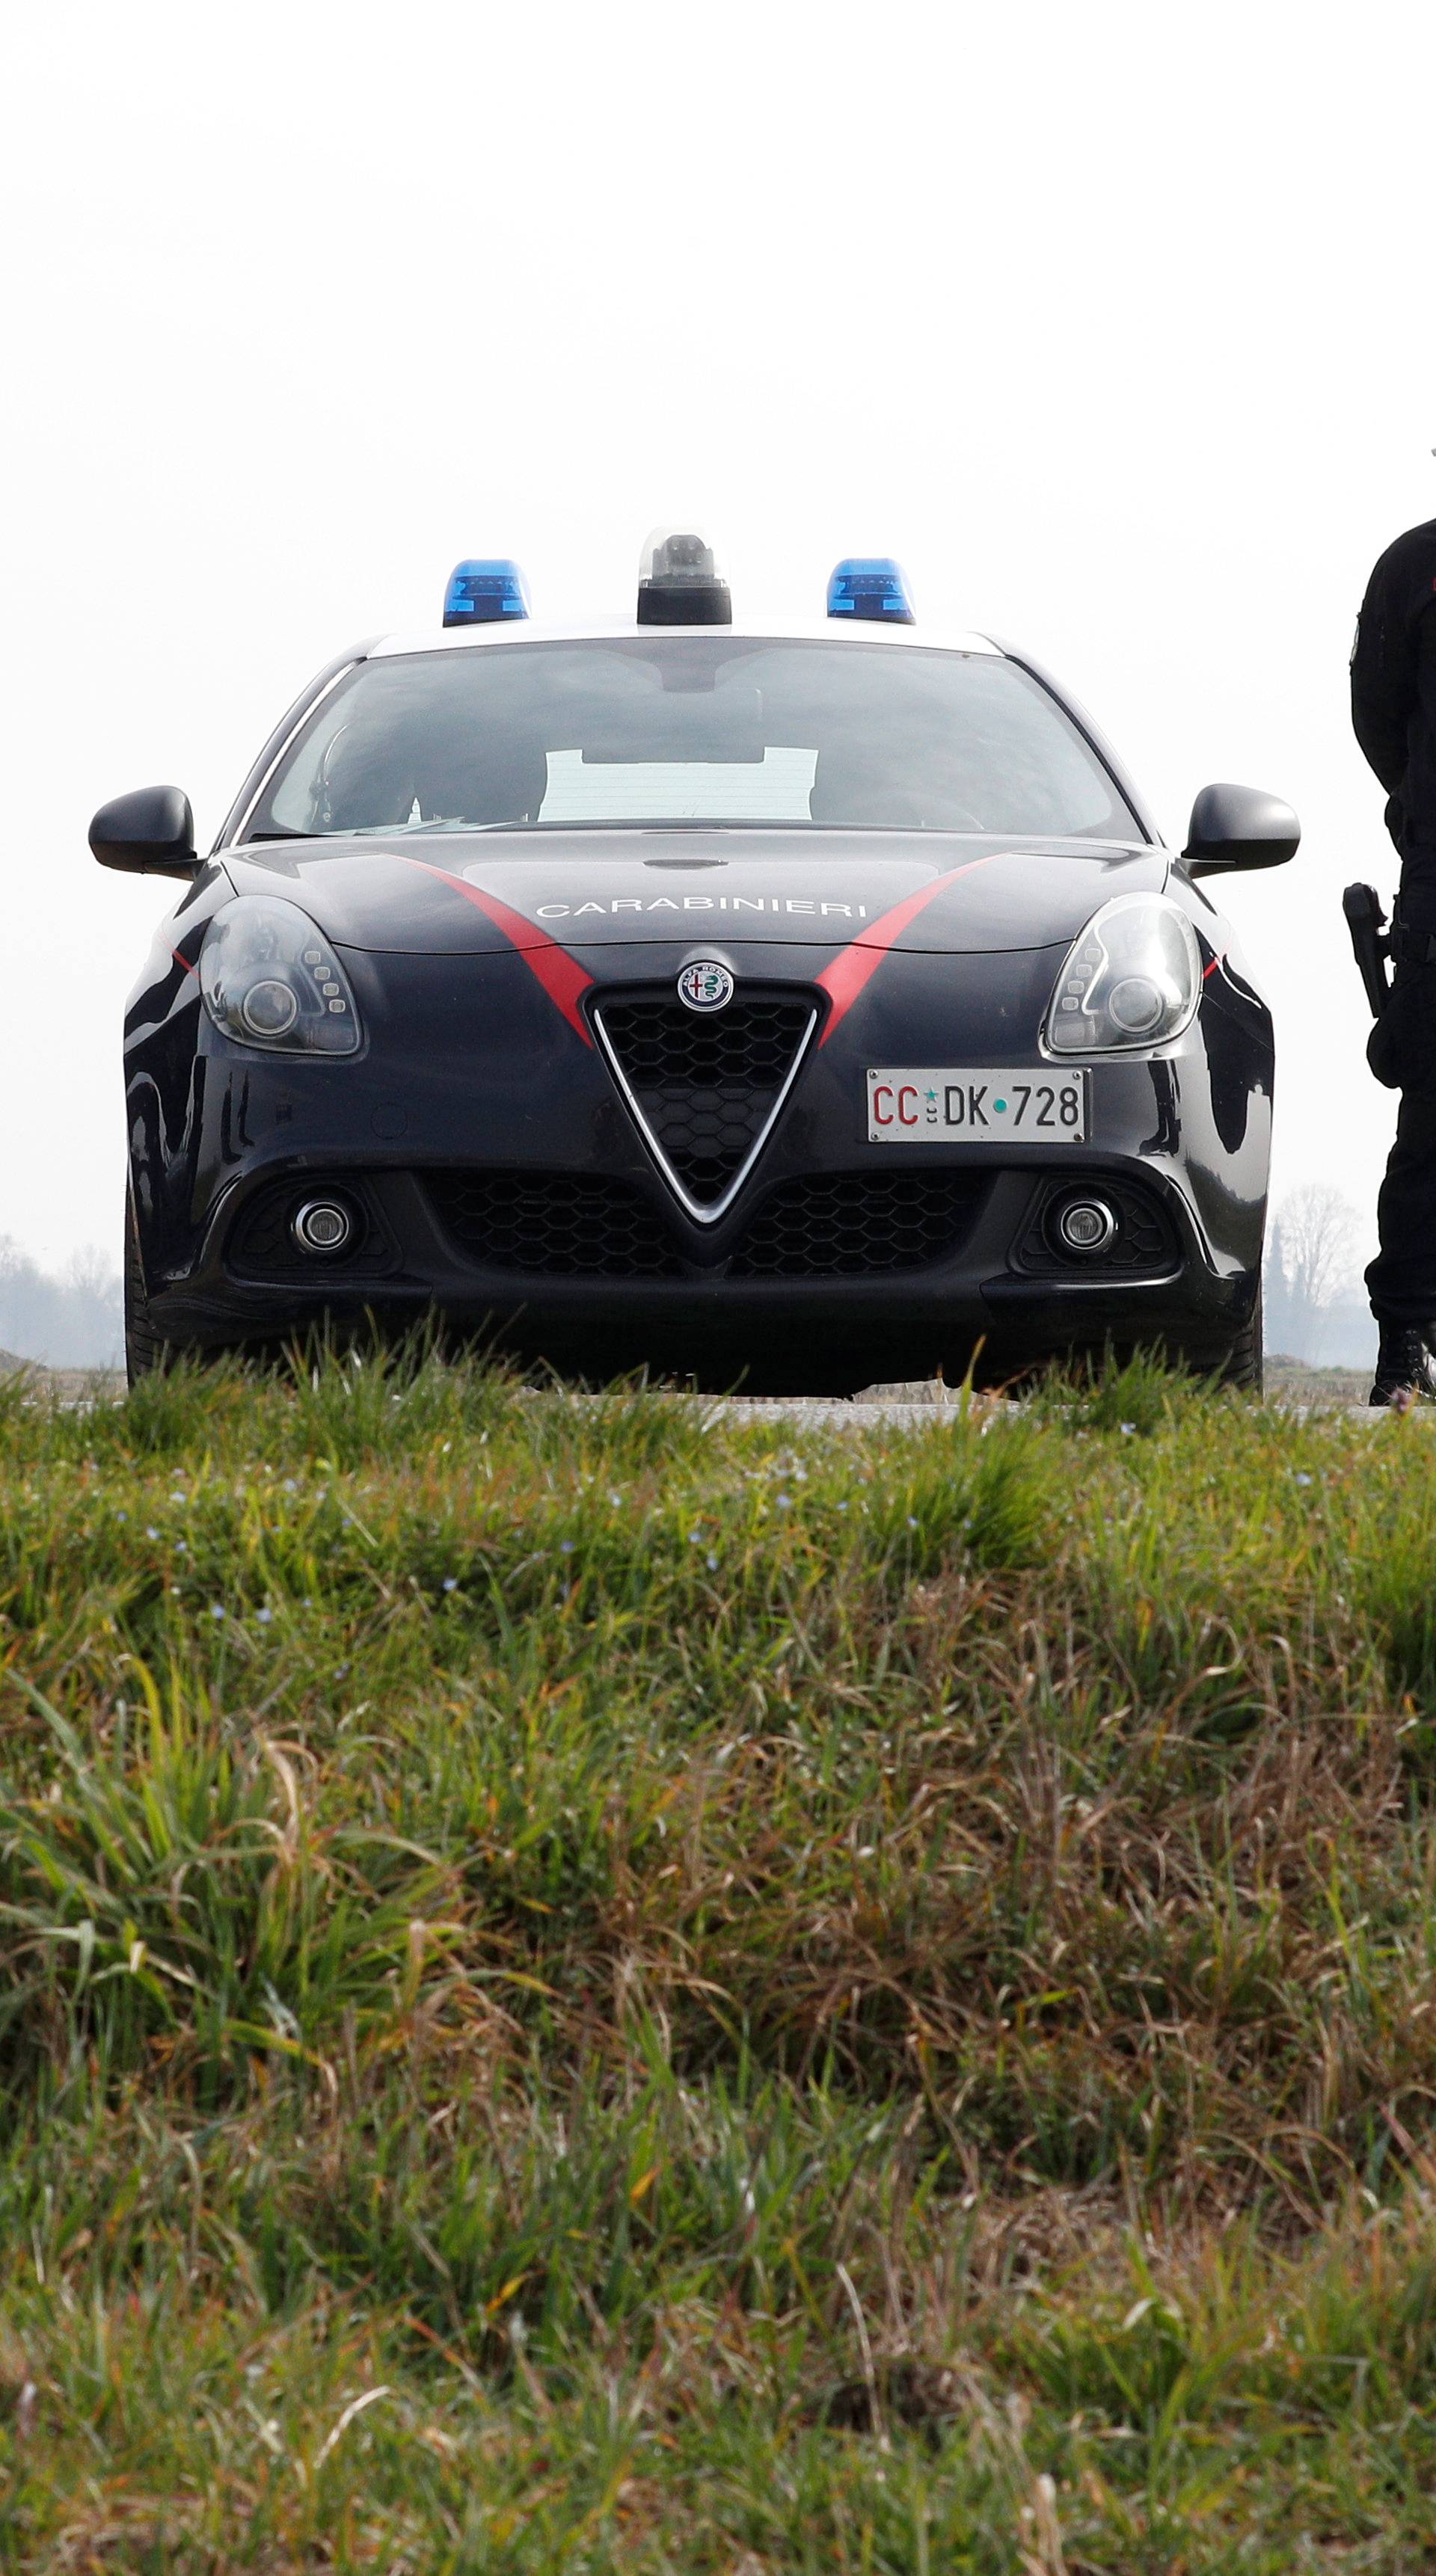 Carabinieri officers patrol outside the town of Castiglione D'Adda